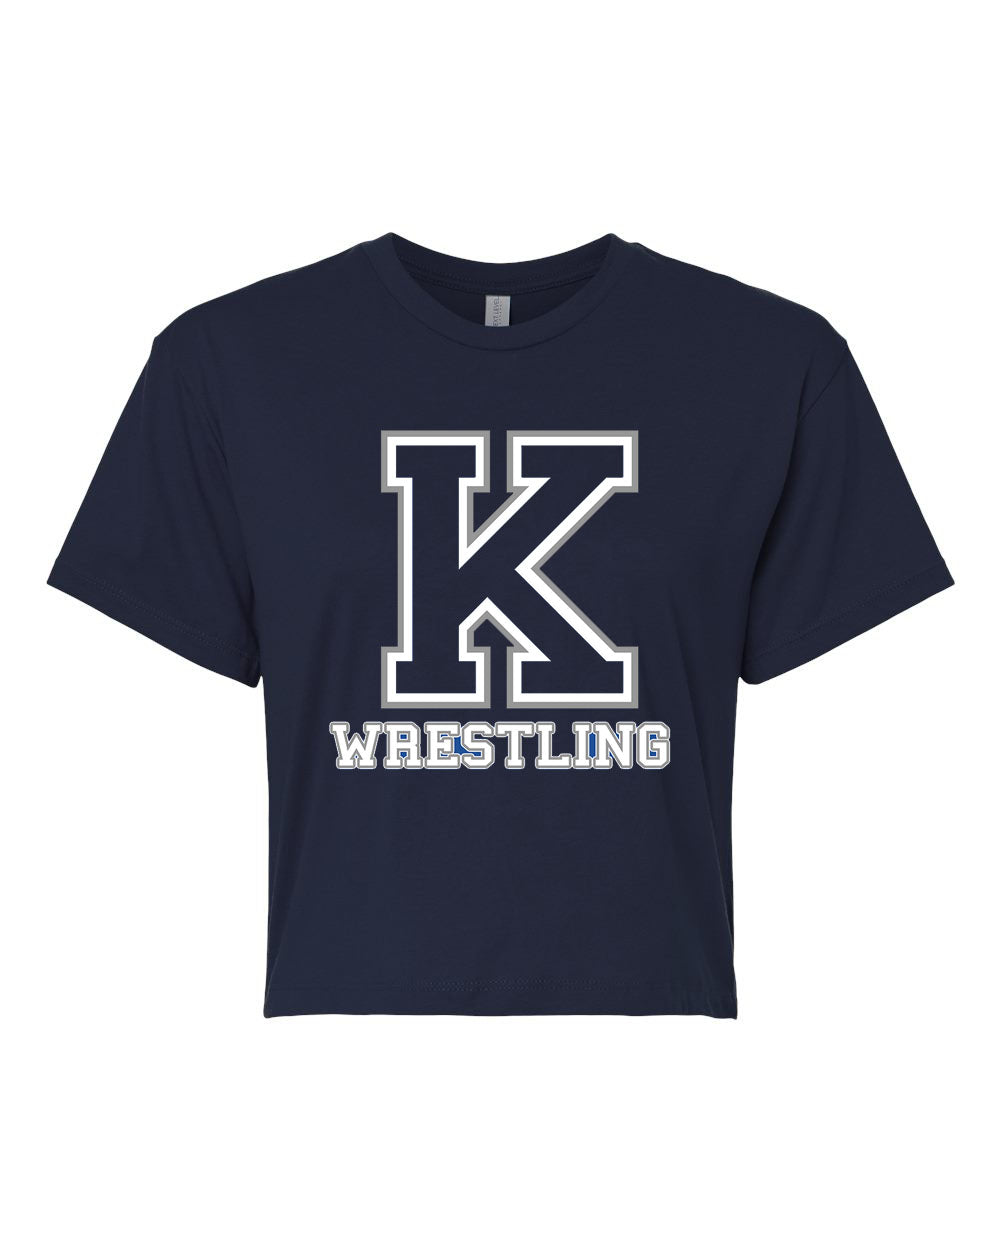 Kittatinny Wrestling Design 6 Crop Top